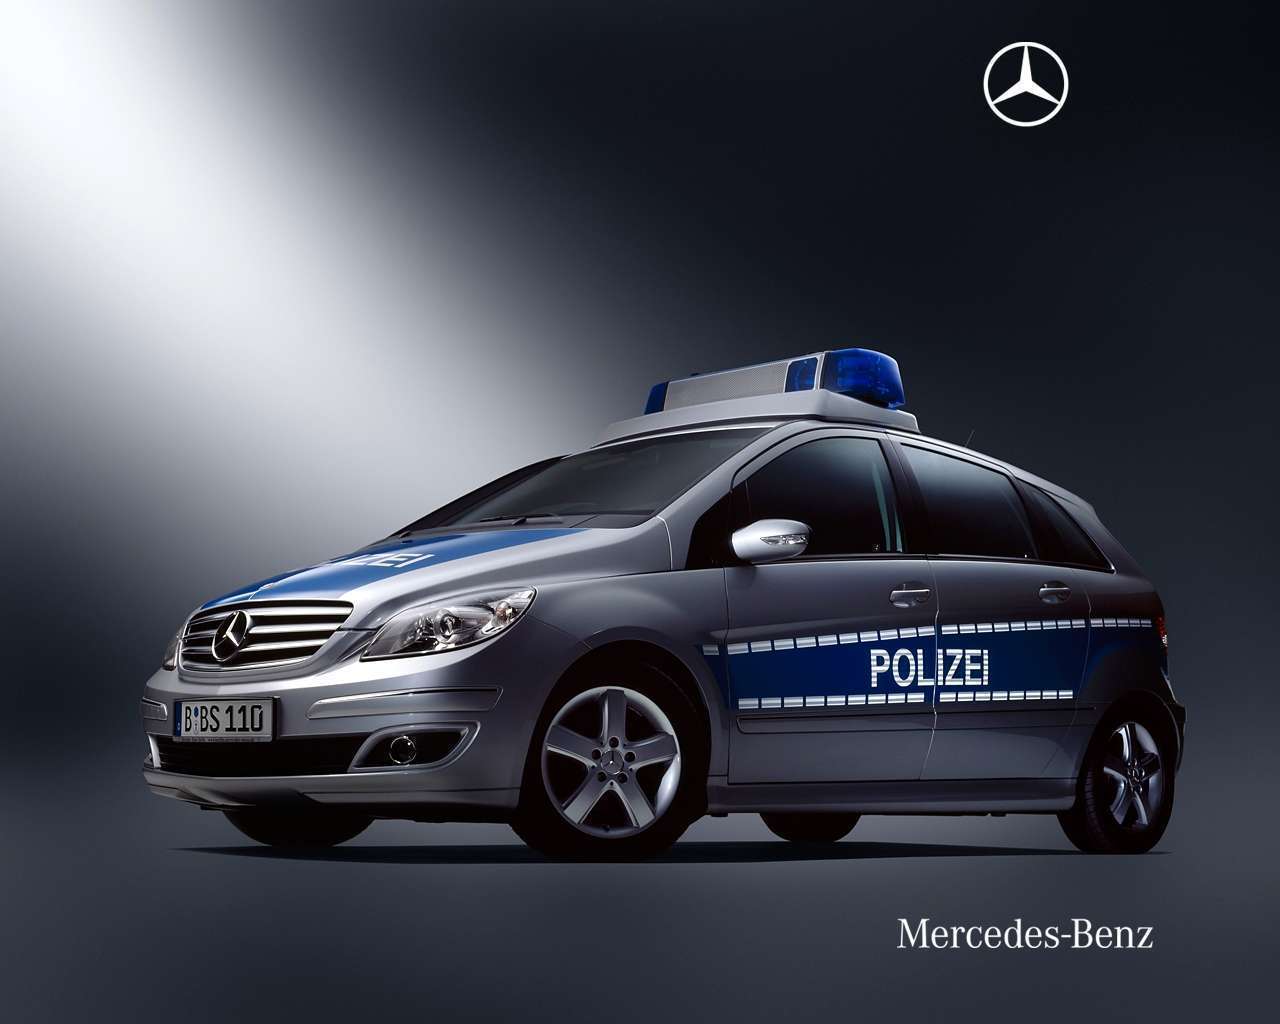 Free download File Name german police wallpaper wallpaperjpg